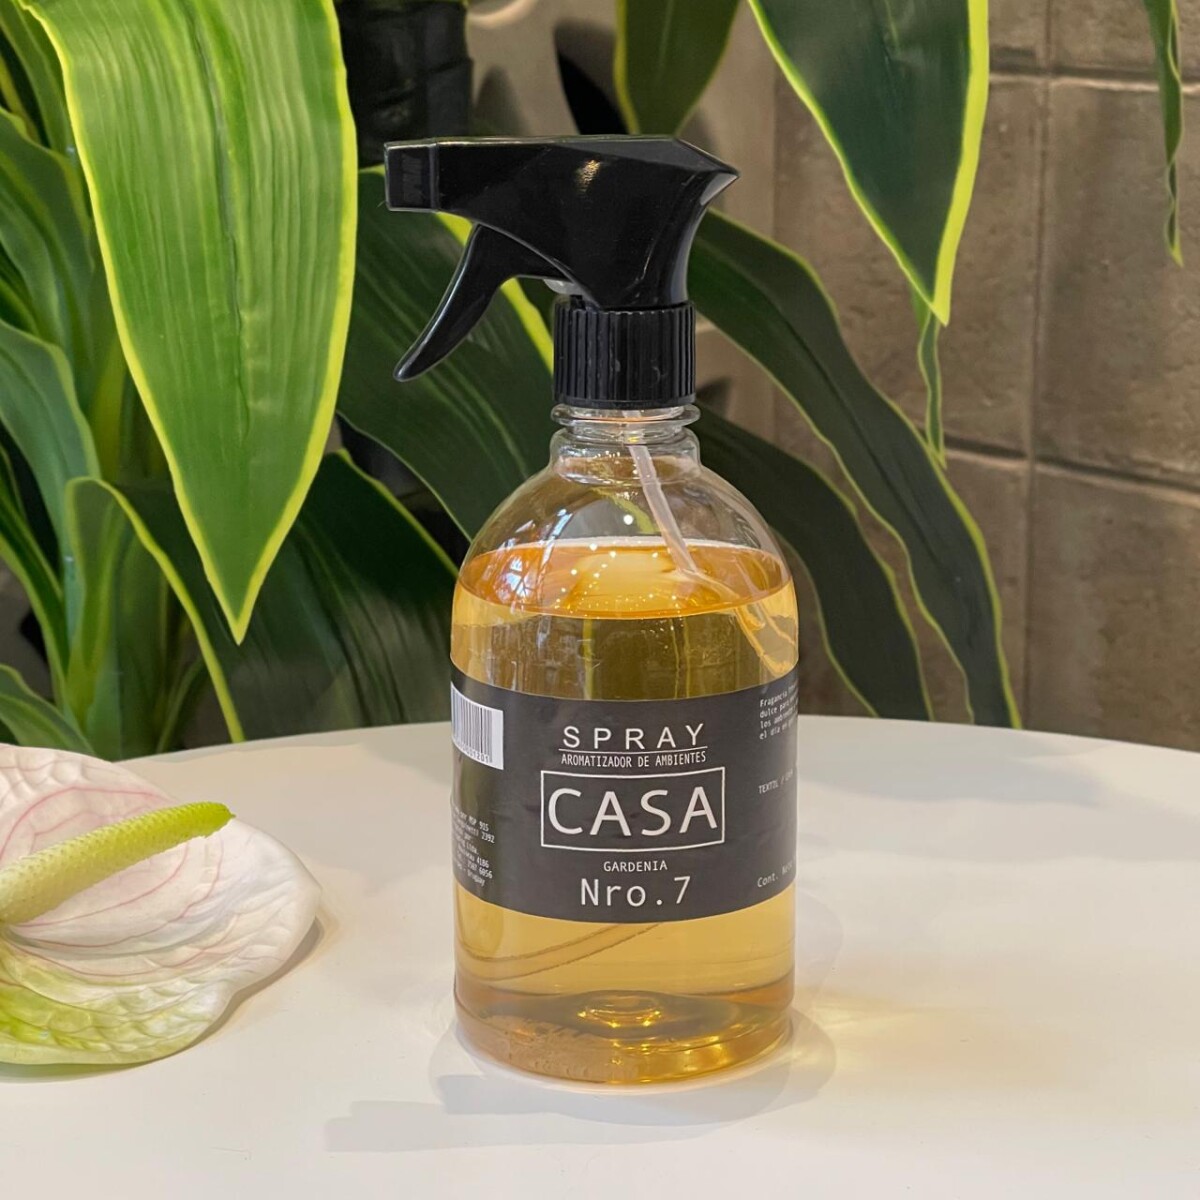 Spray Aromatizador Ambientes Nr7 / Gardenia 500ml 